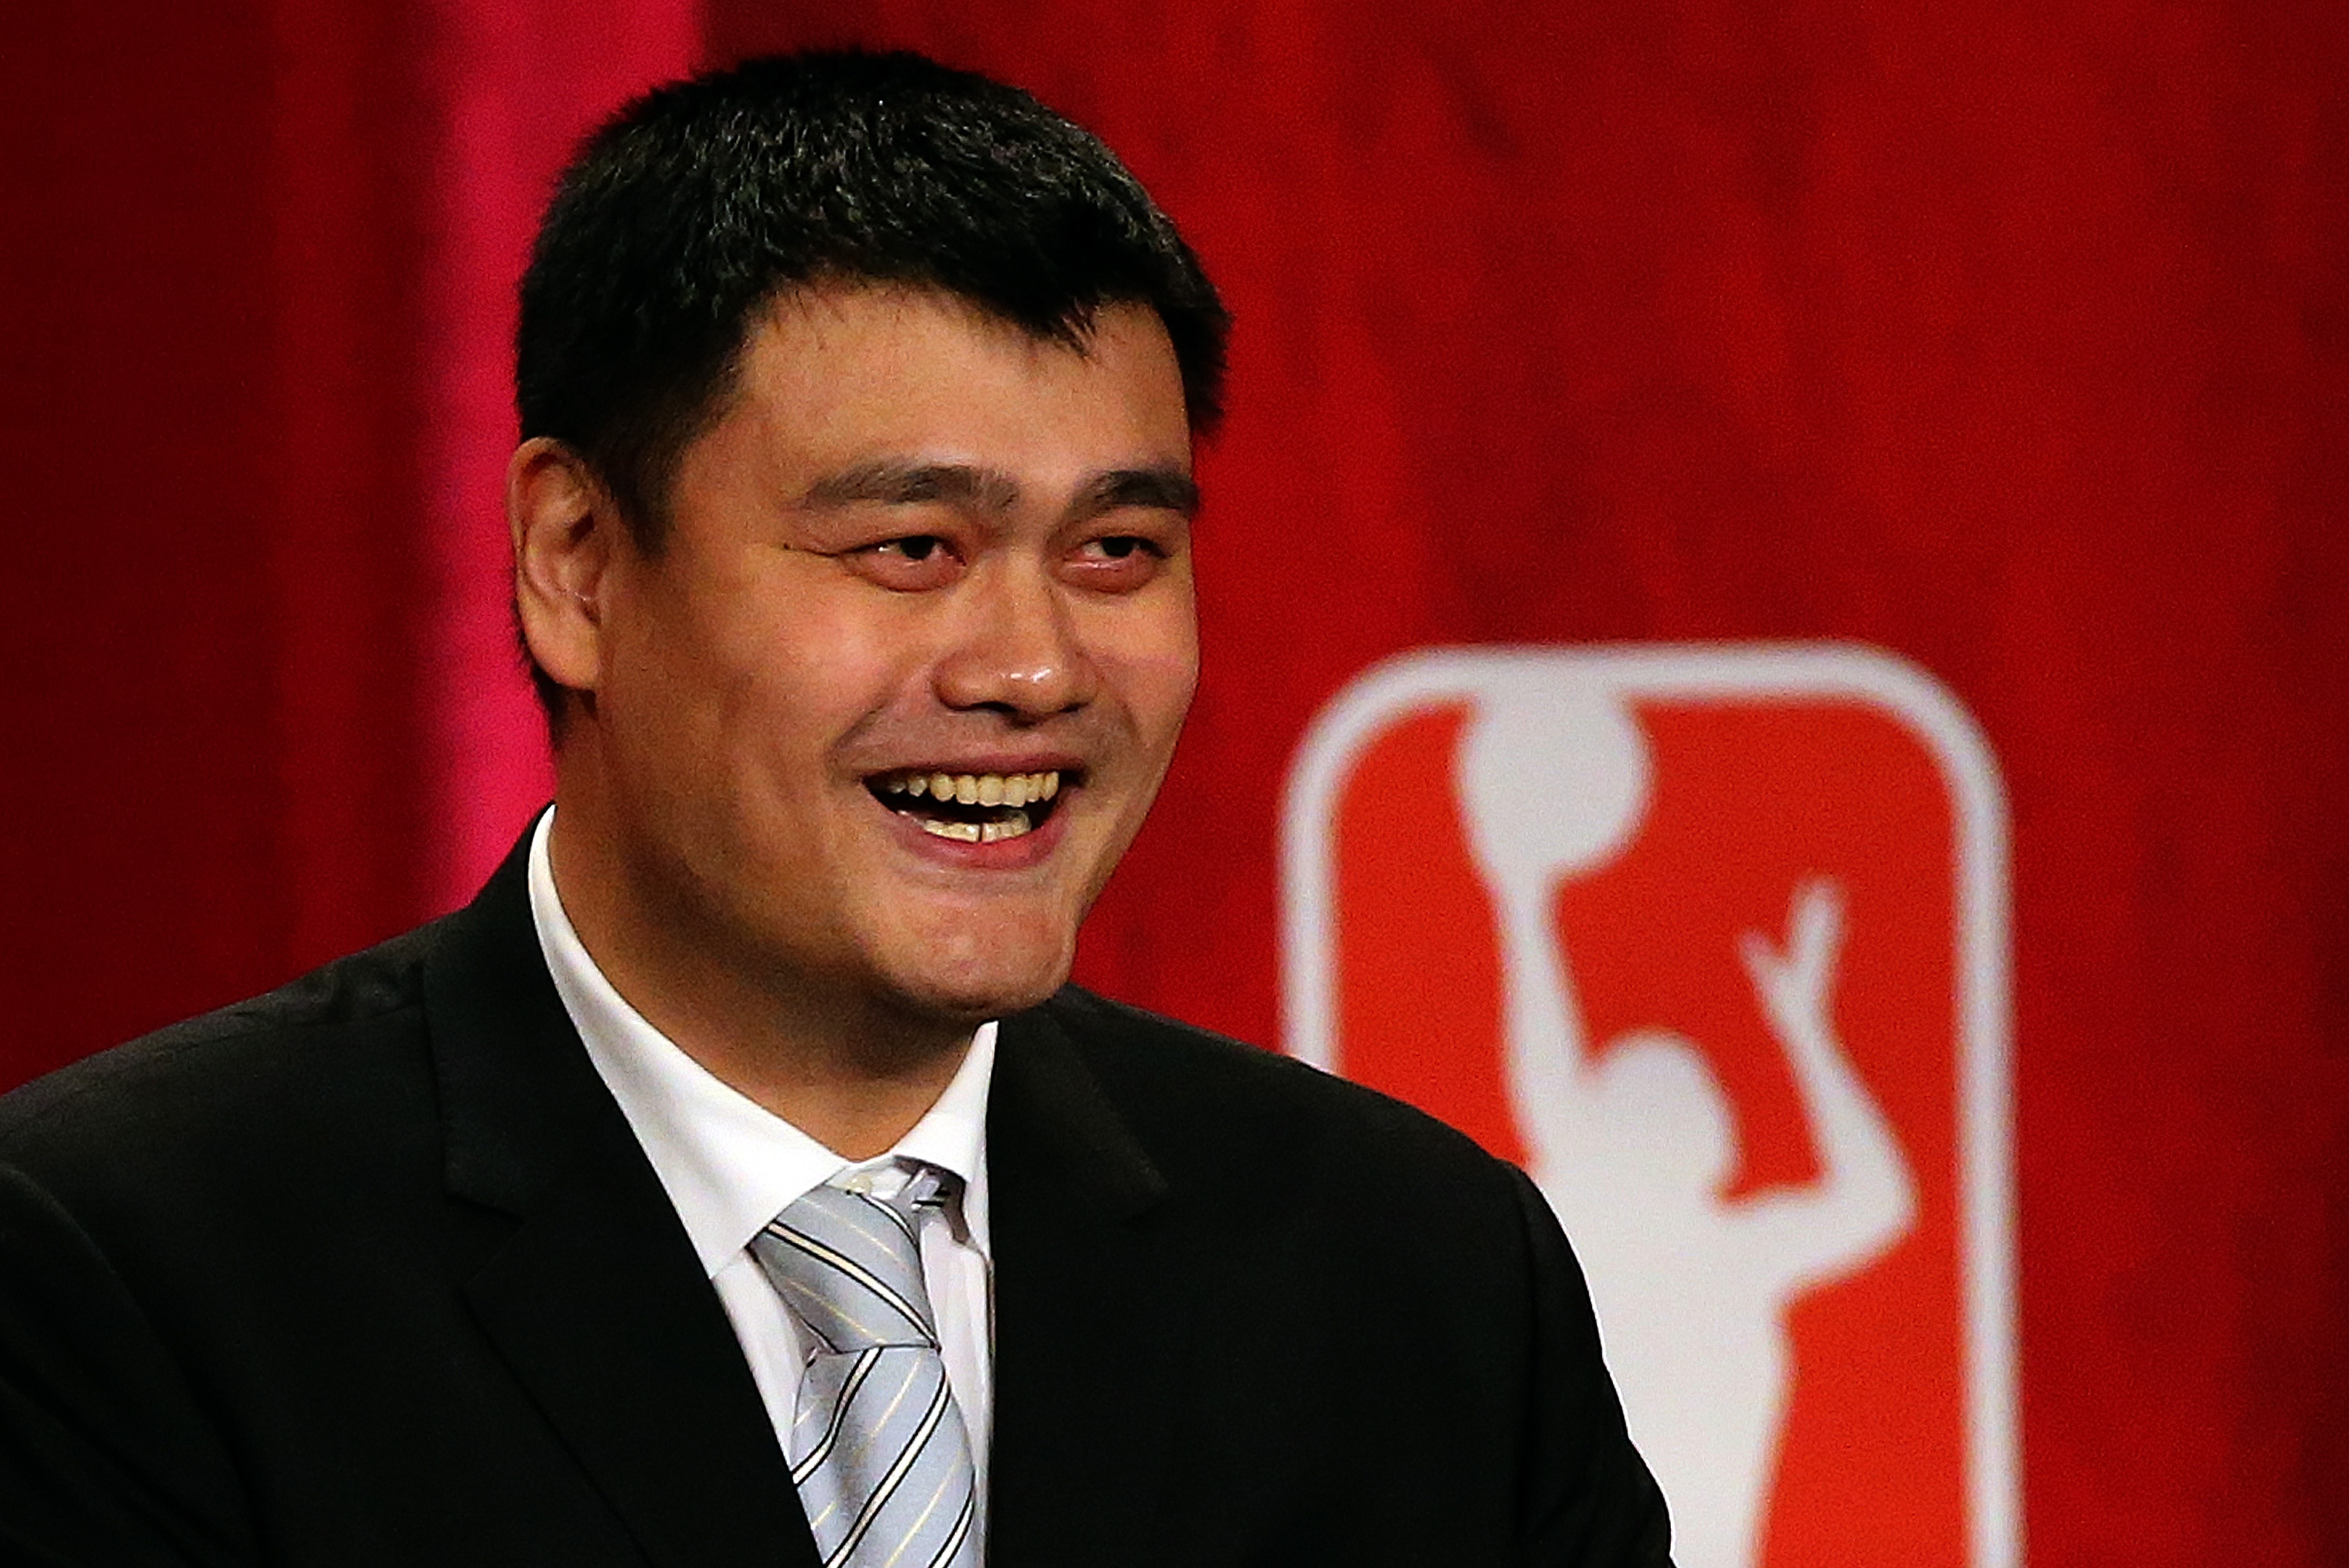 Rockets retiring Yao Ming's No. 11 jersey